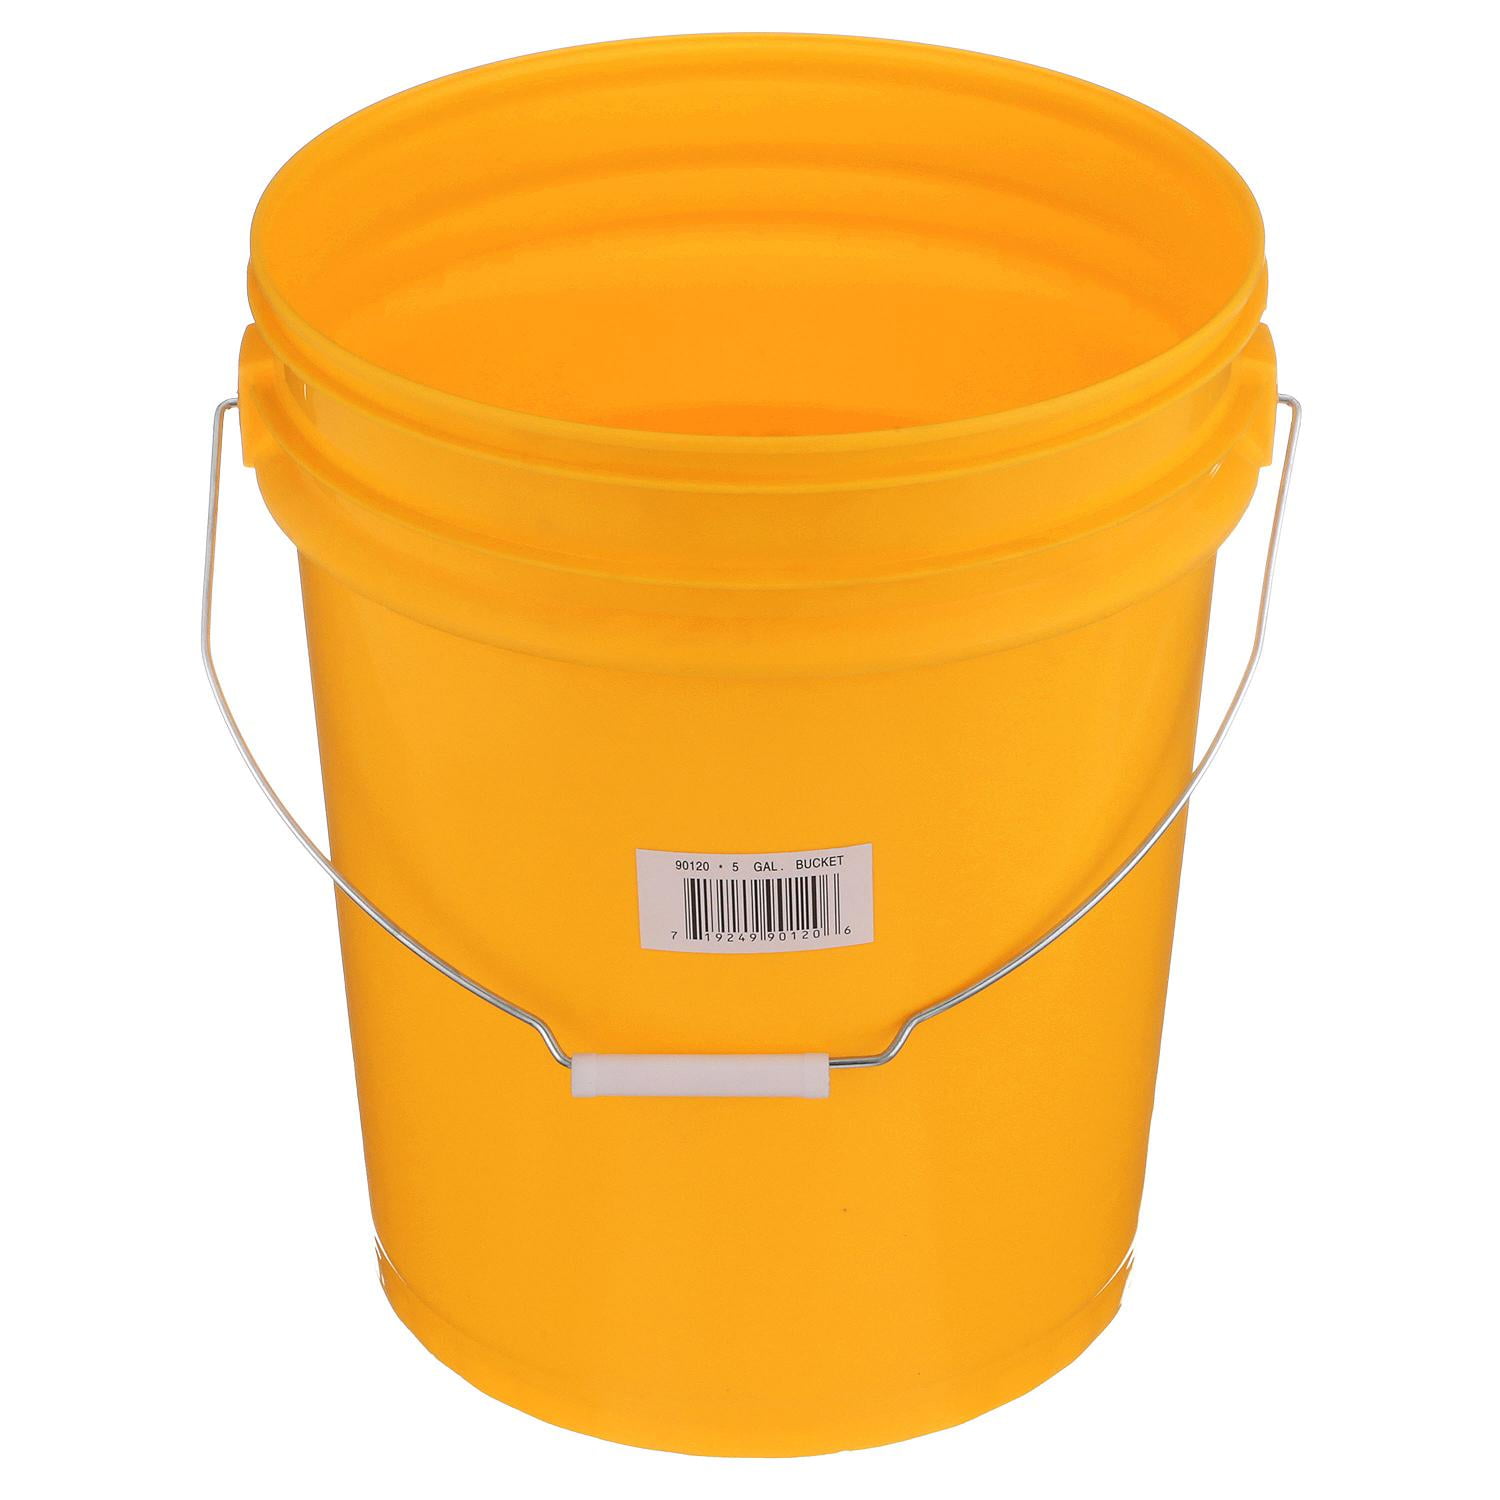 Seachoice 5-Gallon Plastic Bucket w/ Metal Handle, Yellow